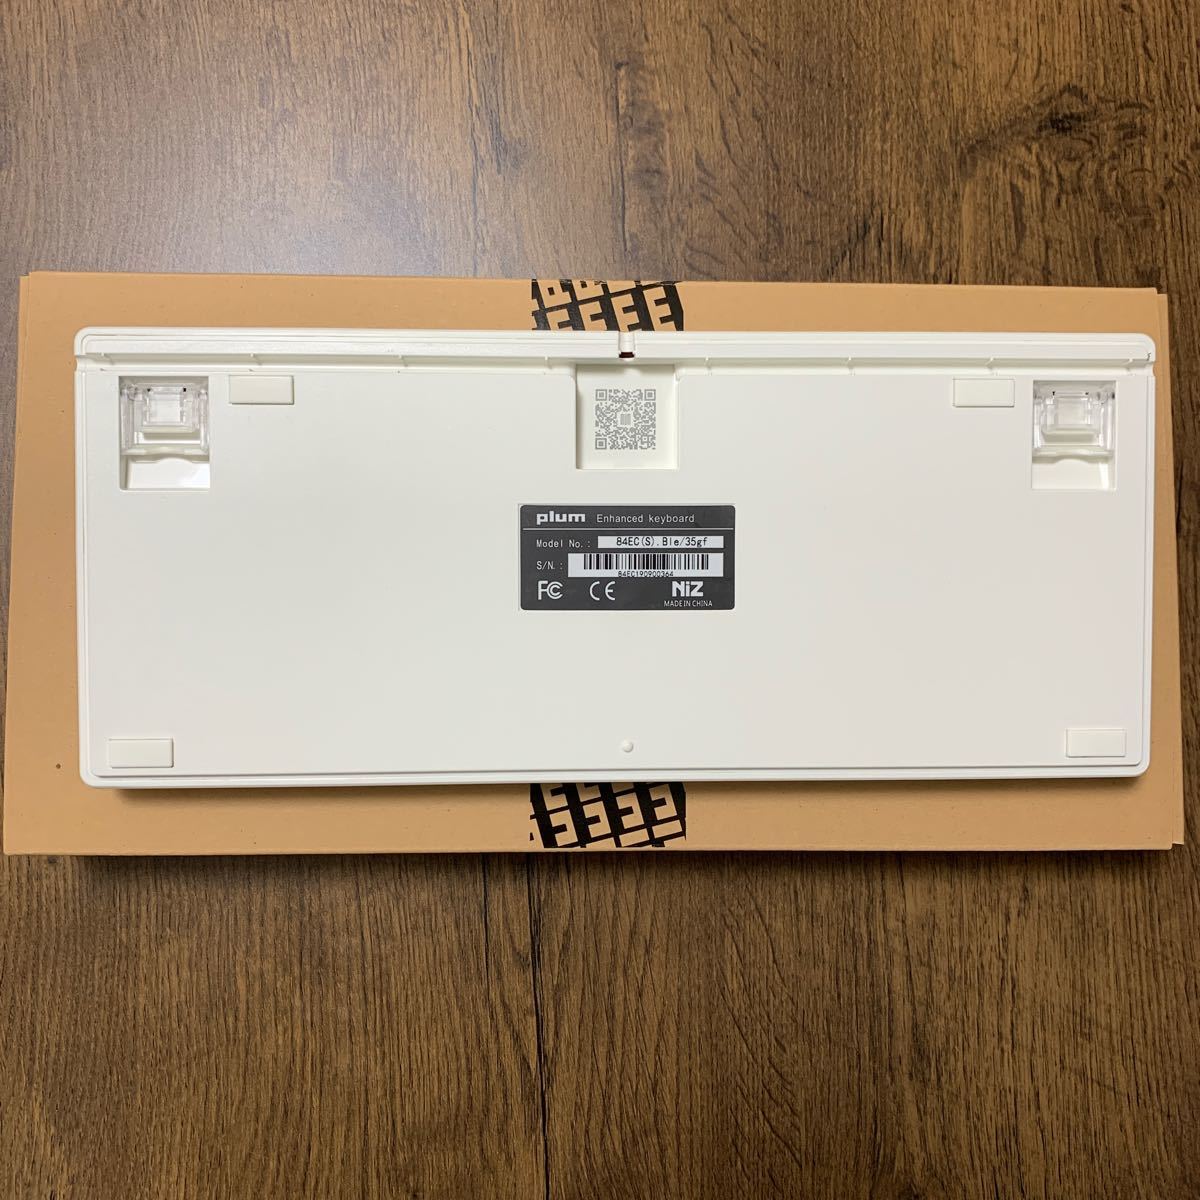 NiZ Plum 静電容量無接点方式 キーボード 35g荷重 84キー 有線/無線